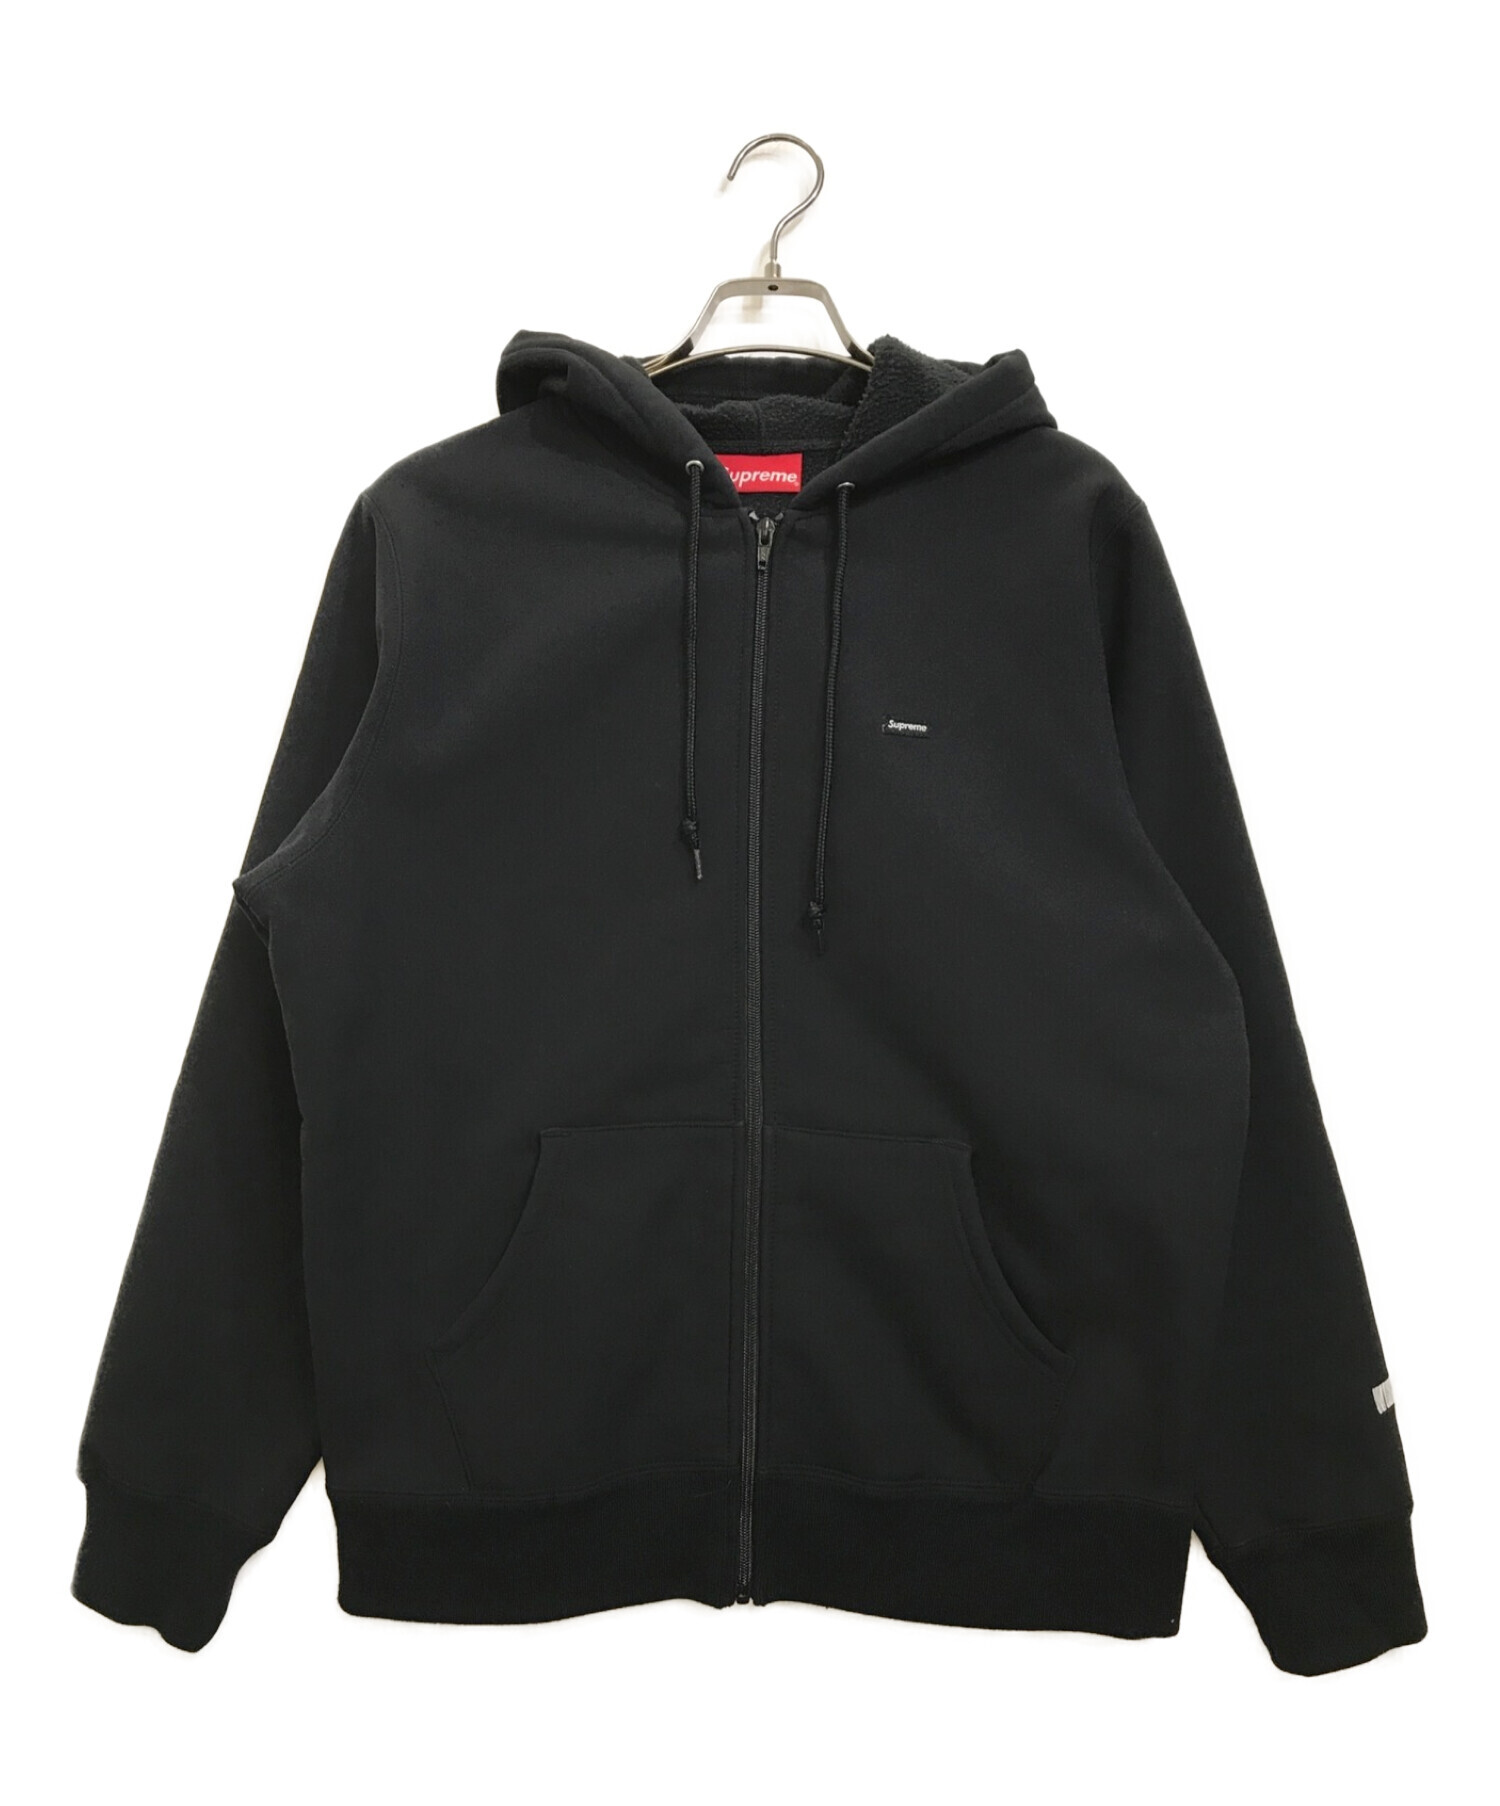 SUPREME (シュプリーム) WINDSTOPPER Zip Up Hooded Sweatshirt ブラック サイズ:M